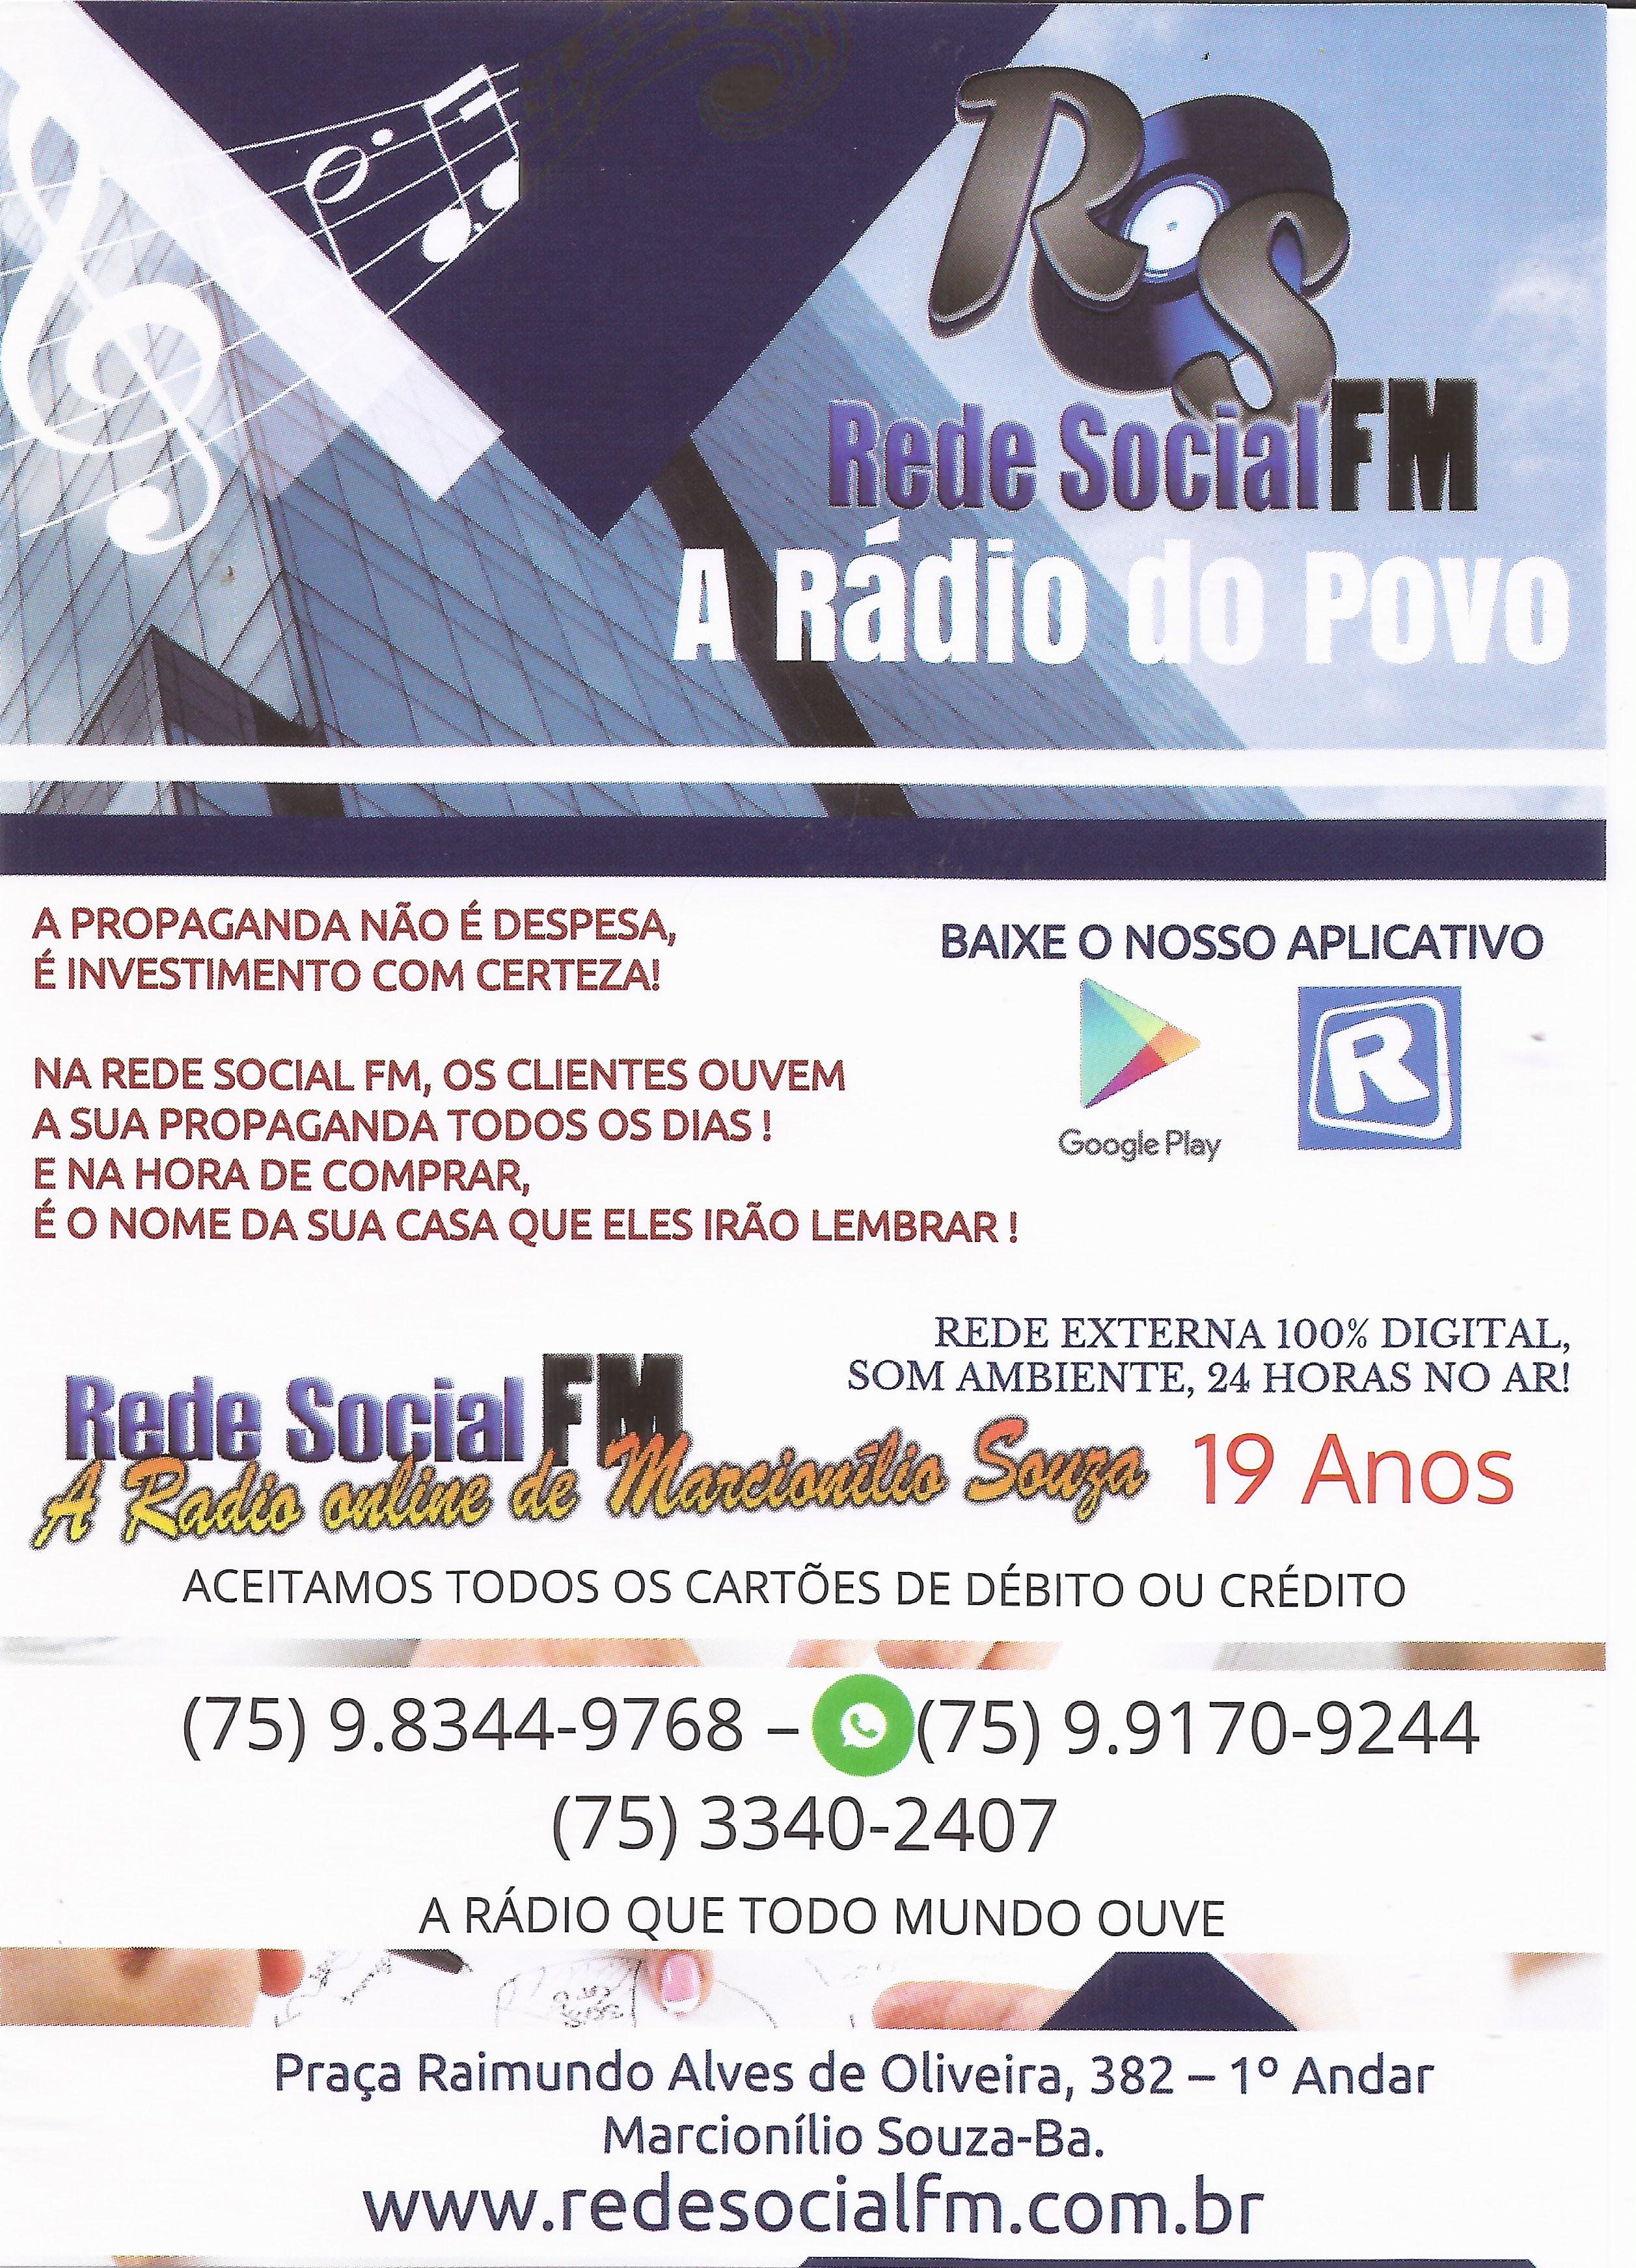 REDE SOCIAL FM